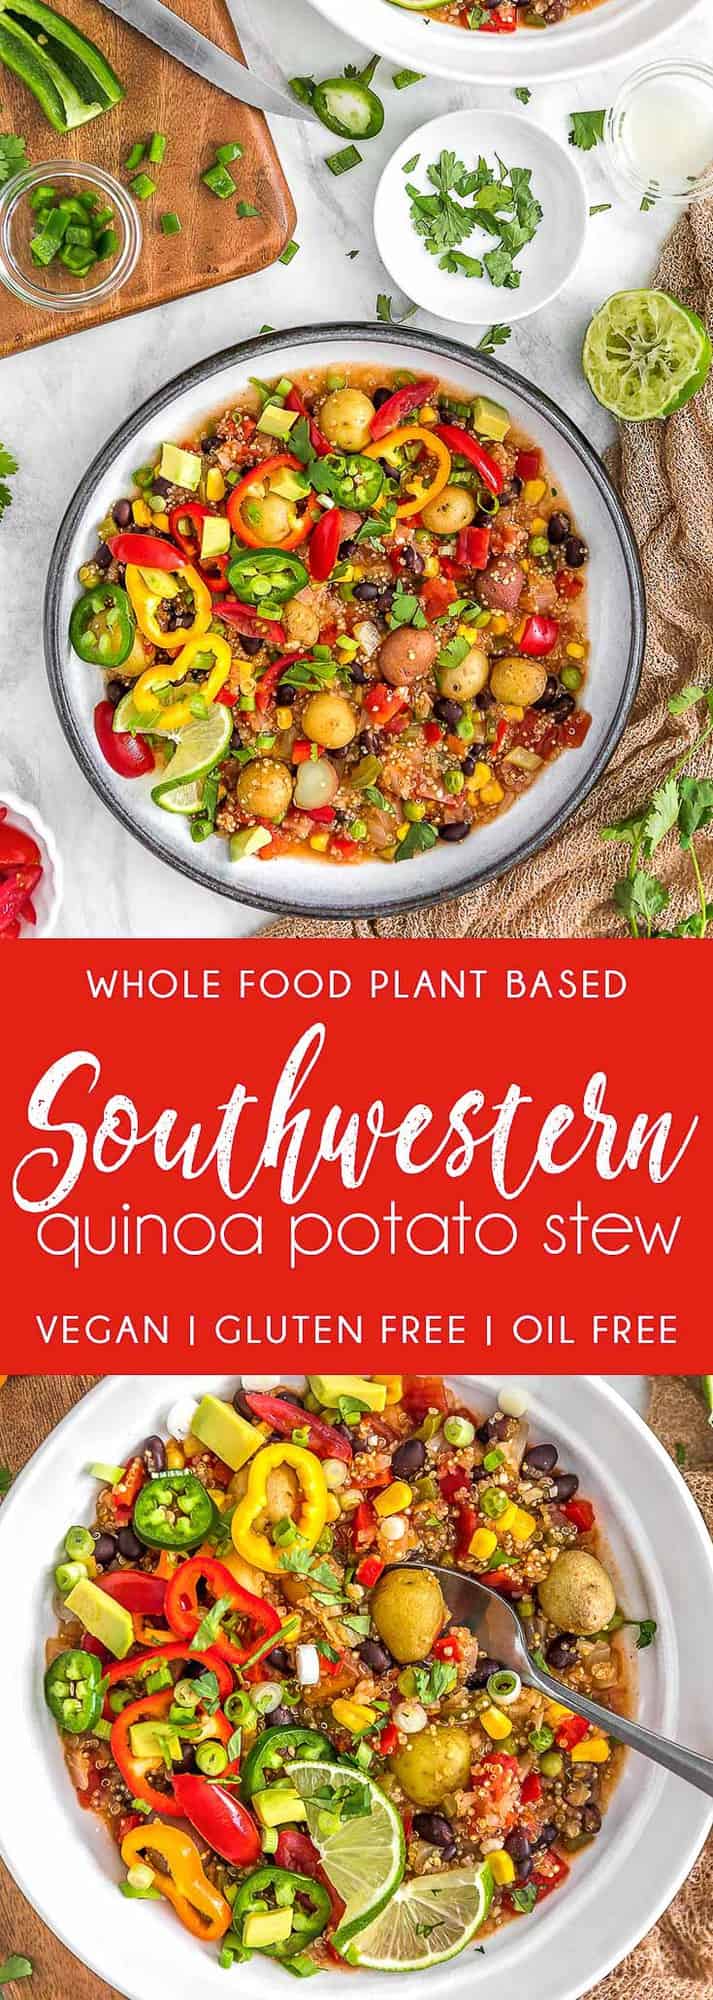 Southwestern Quinoa Potato Stew, Quinoa, Potatoes, Stew, plant based, vegan, vegetarian, whole food plant based, gluten free, recipe, wfpb, healthy, healthy vegan, oil free, no refined sugar, no oil, refined sugar free, dairy free, dinner, lunch, veggies